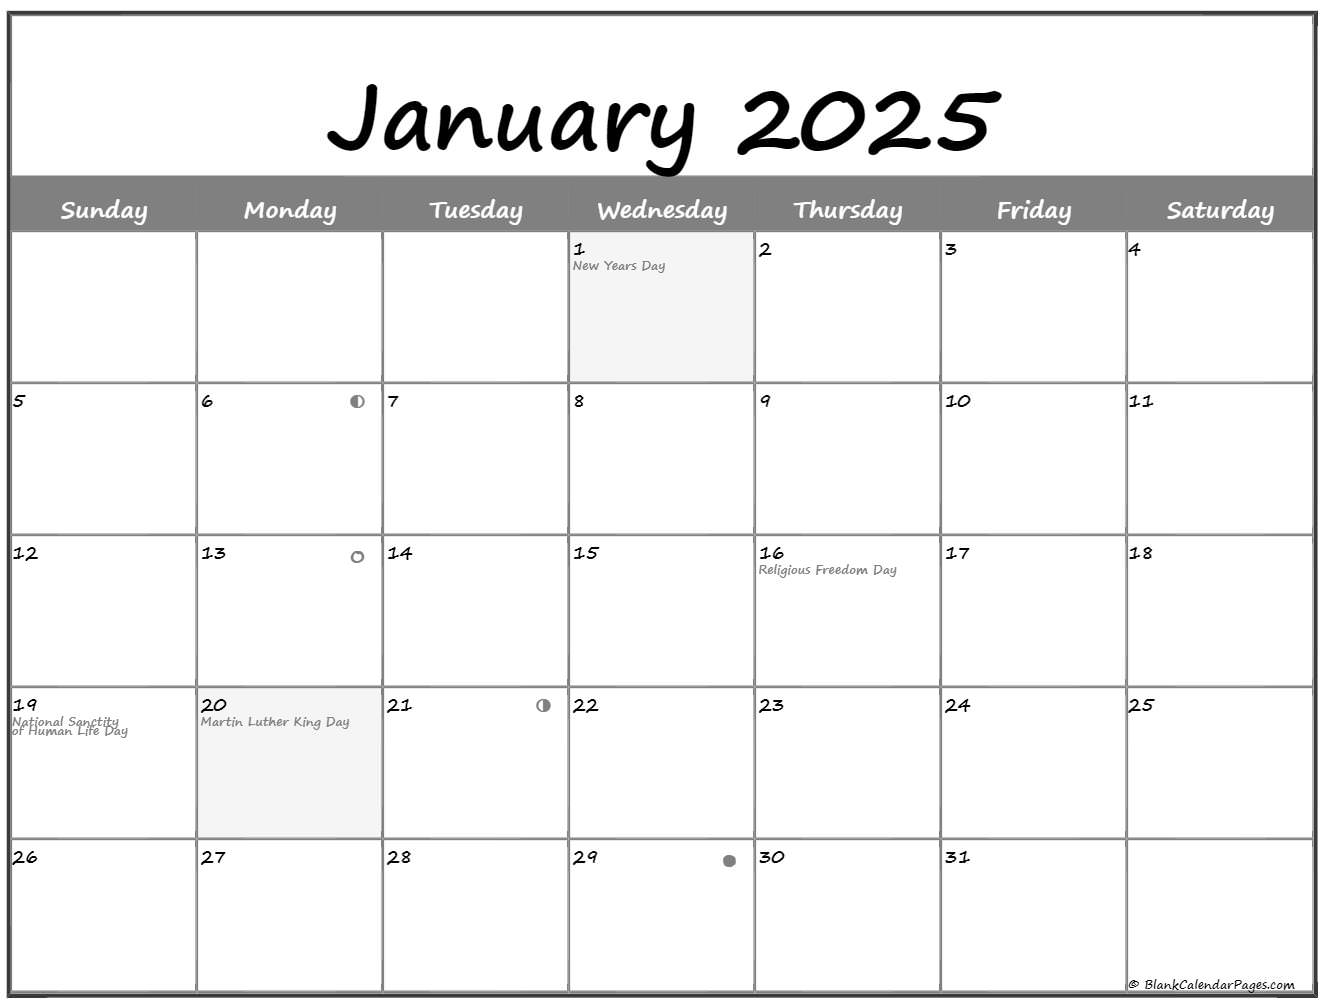 Lunar Calendar January 2025 